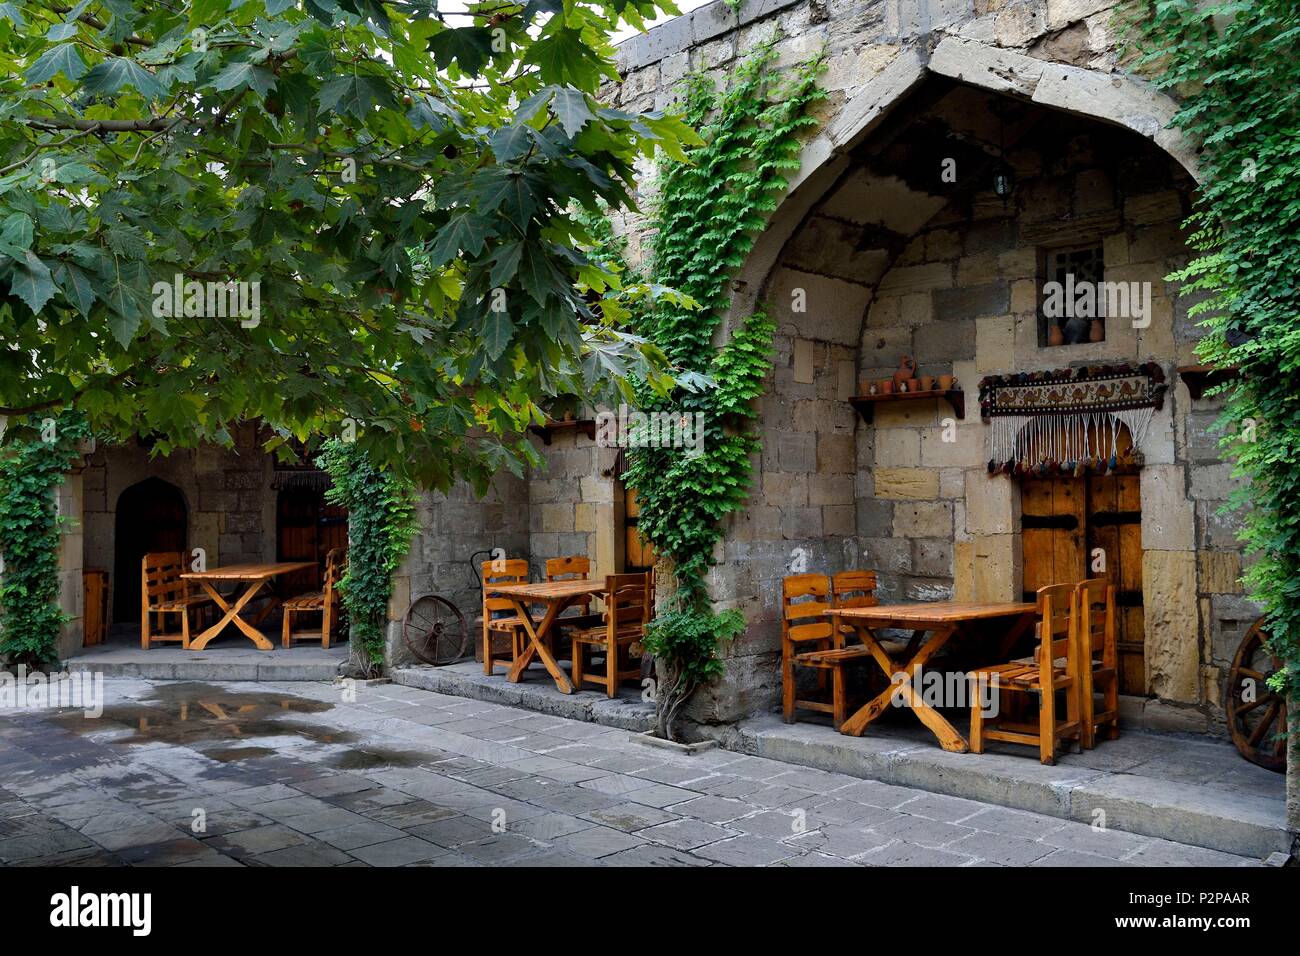 Azerbaijan, Baku, Old City, listed as World heritage by UNESCO, Karvansara restaurant, former 15th century caravanserai converted into a restaurant Stock Photo